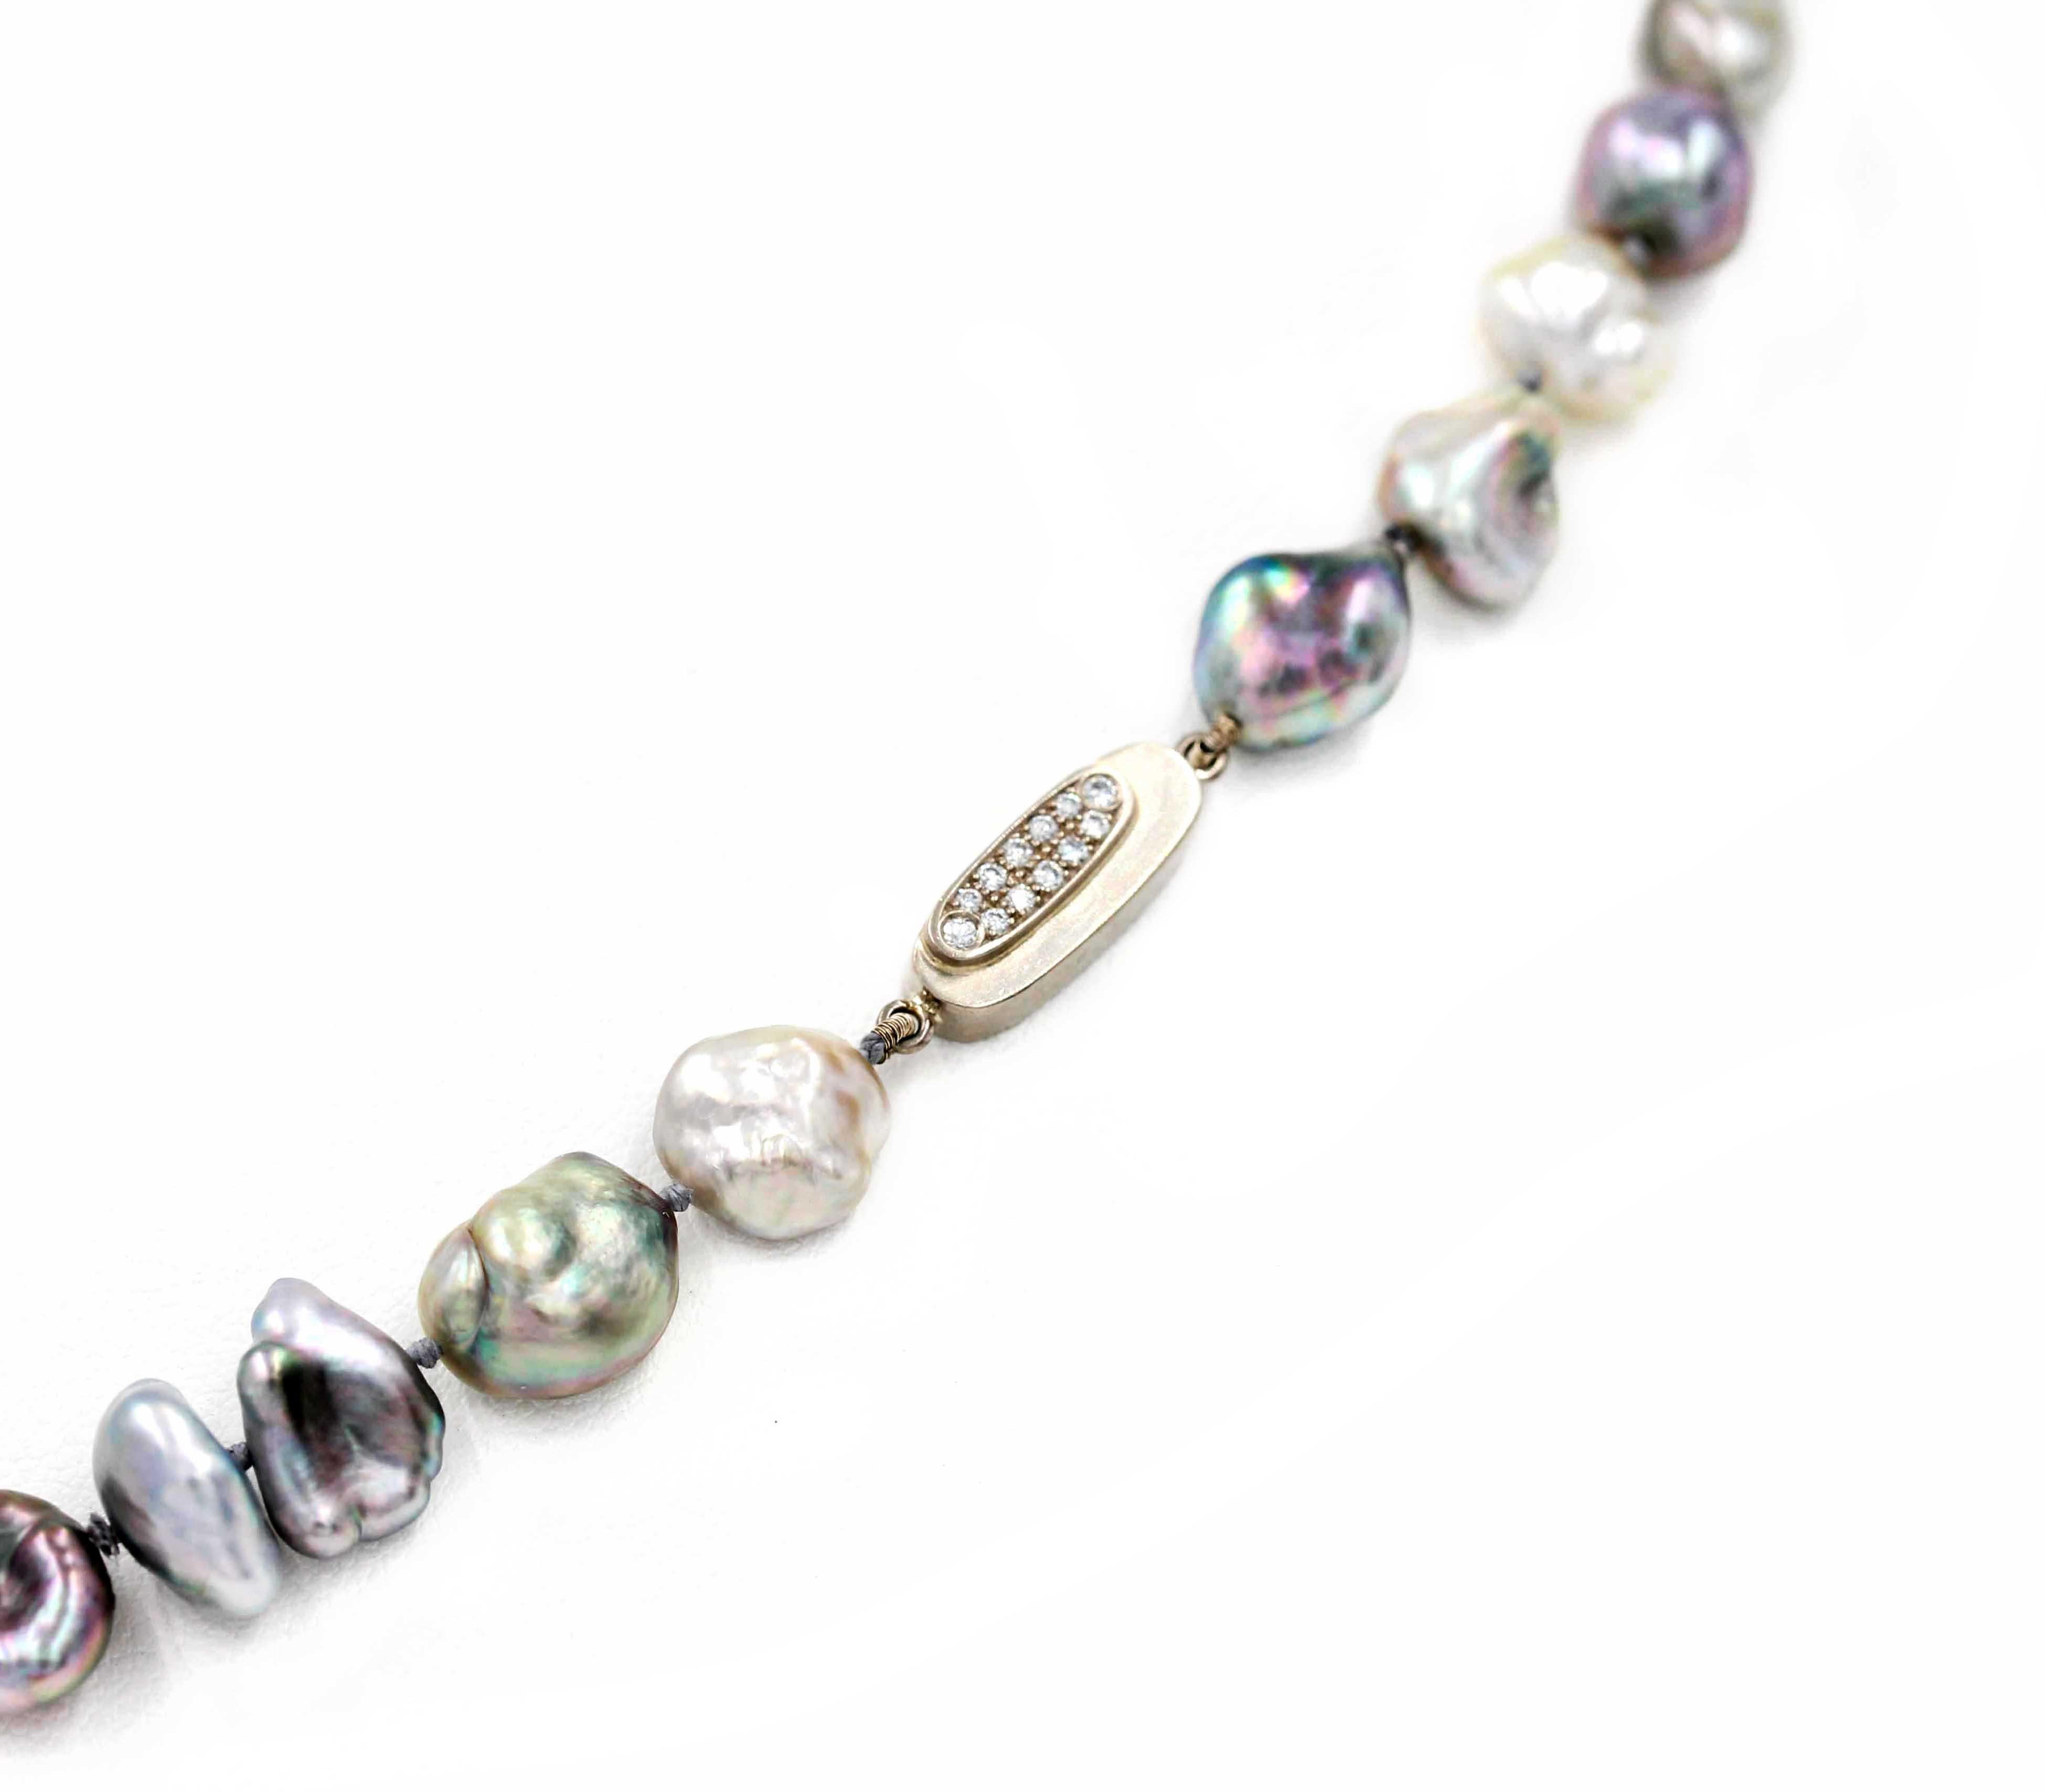 Janis Kerman, Keshi Pearl& and Gem Stone Necklace, 2018, 18k gold, white gold, palladium, Natural Keshi Pearls, Diamond,